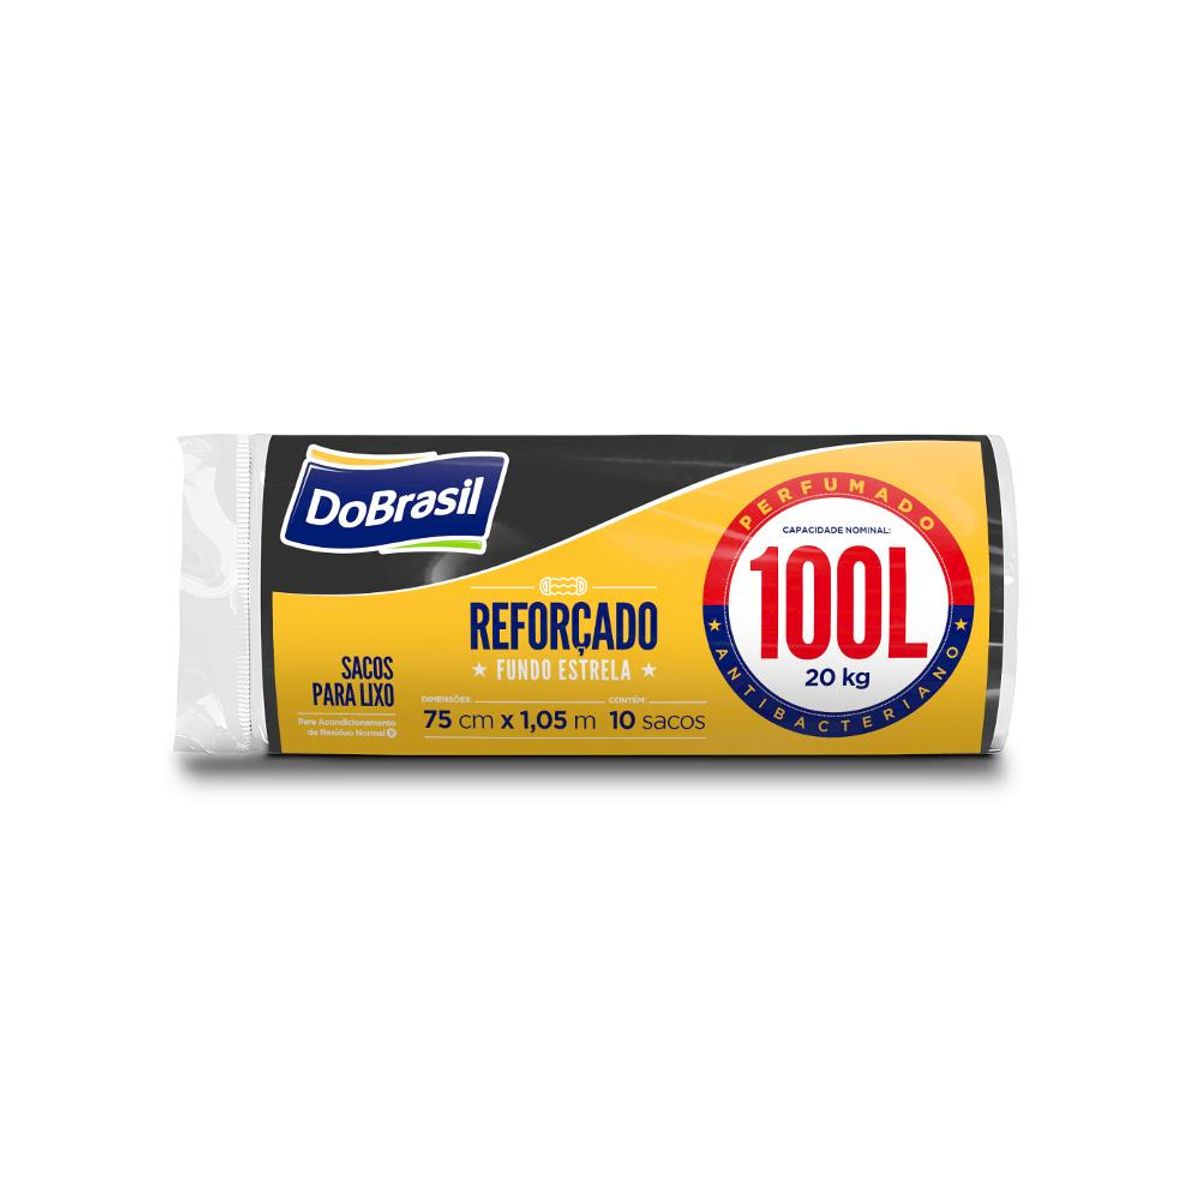 Saco para Lixo DoBrasil 100L 10 Unidades image number 0